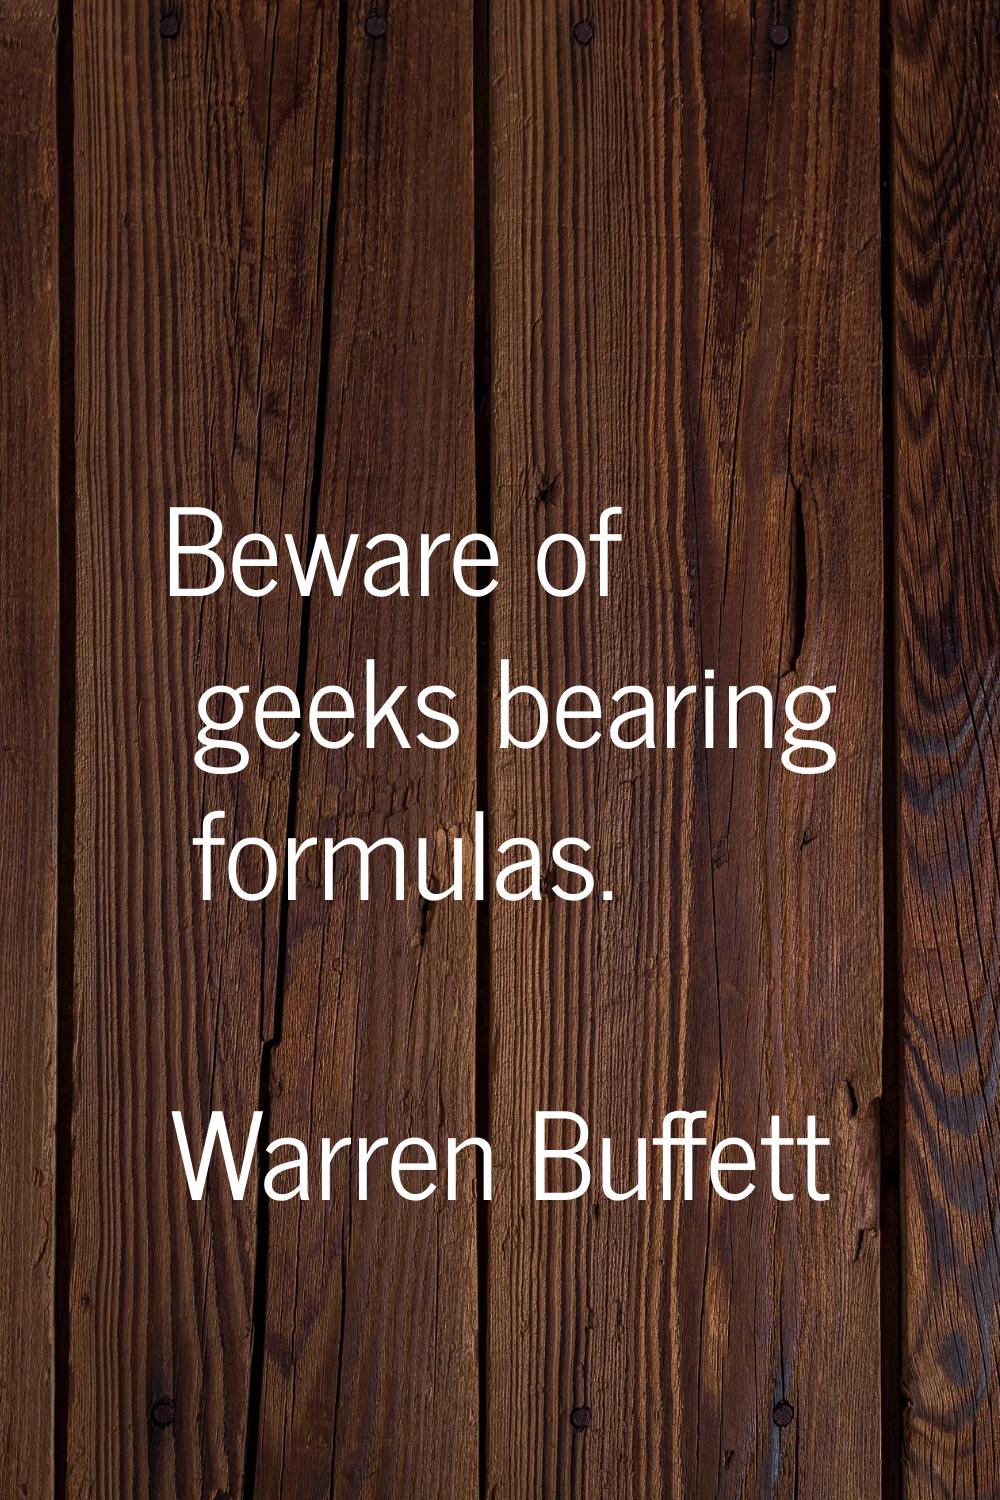 Beware of geeks bearing formulas.